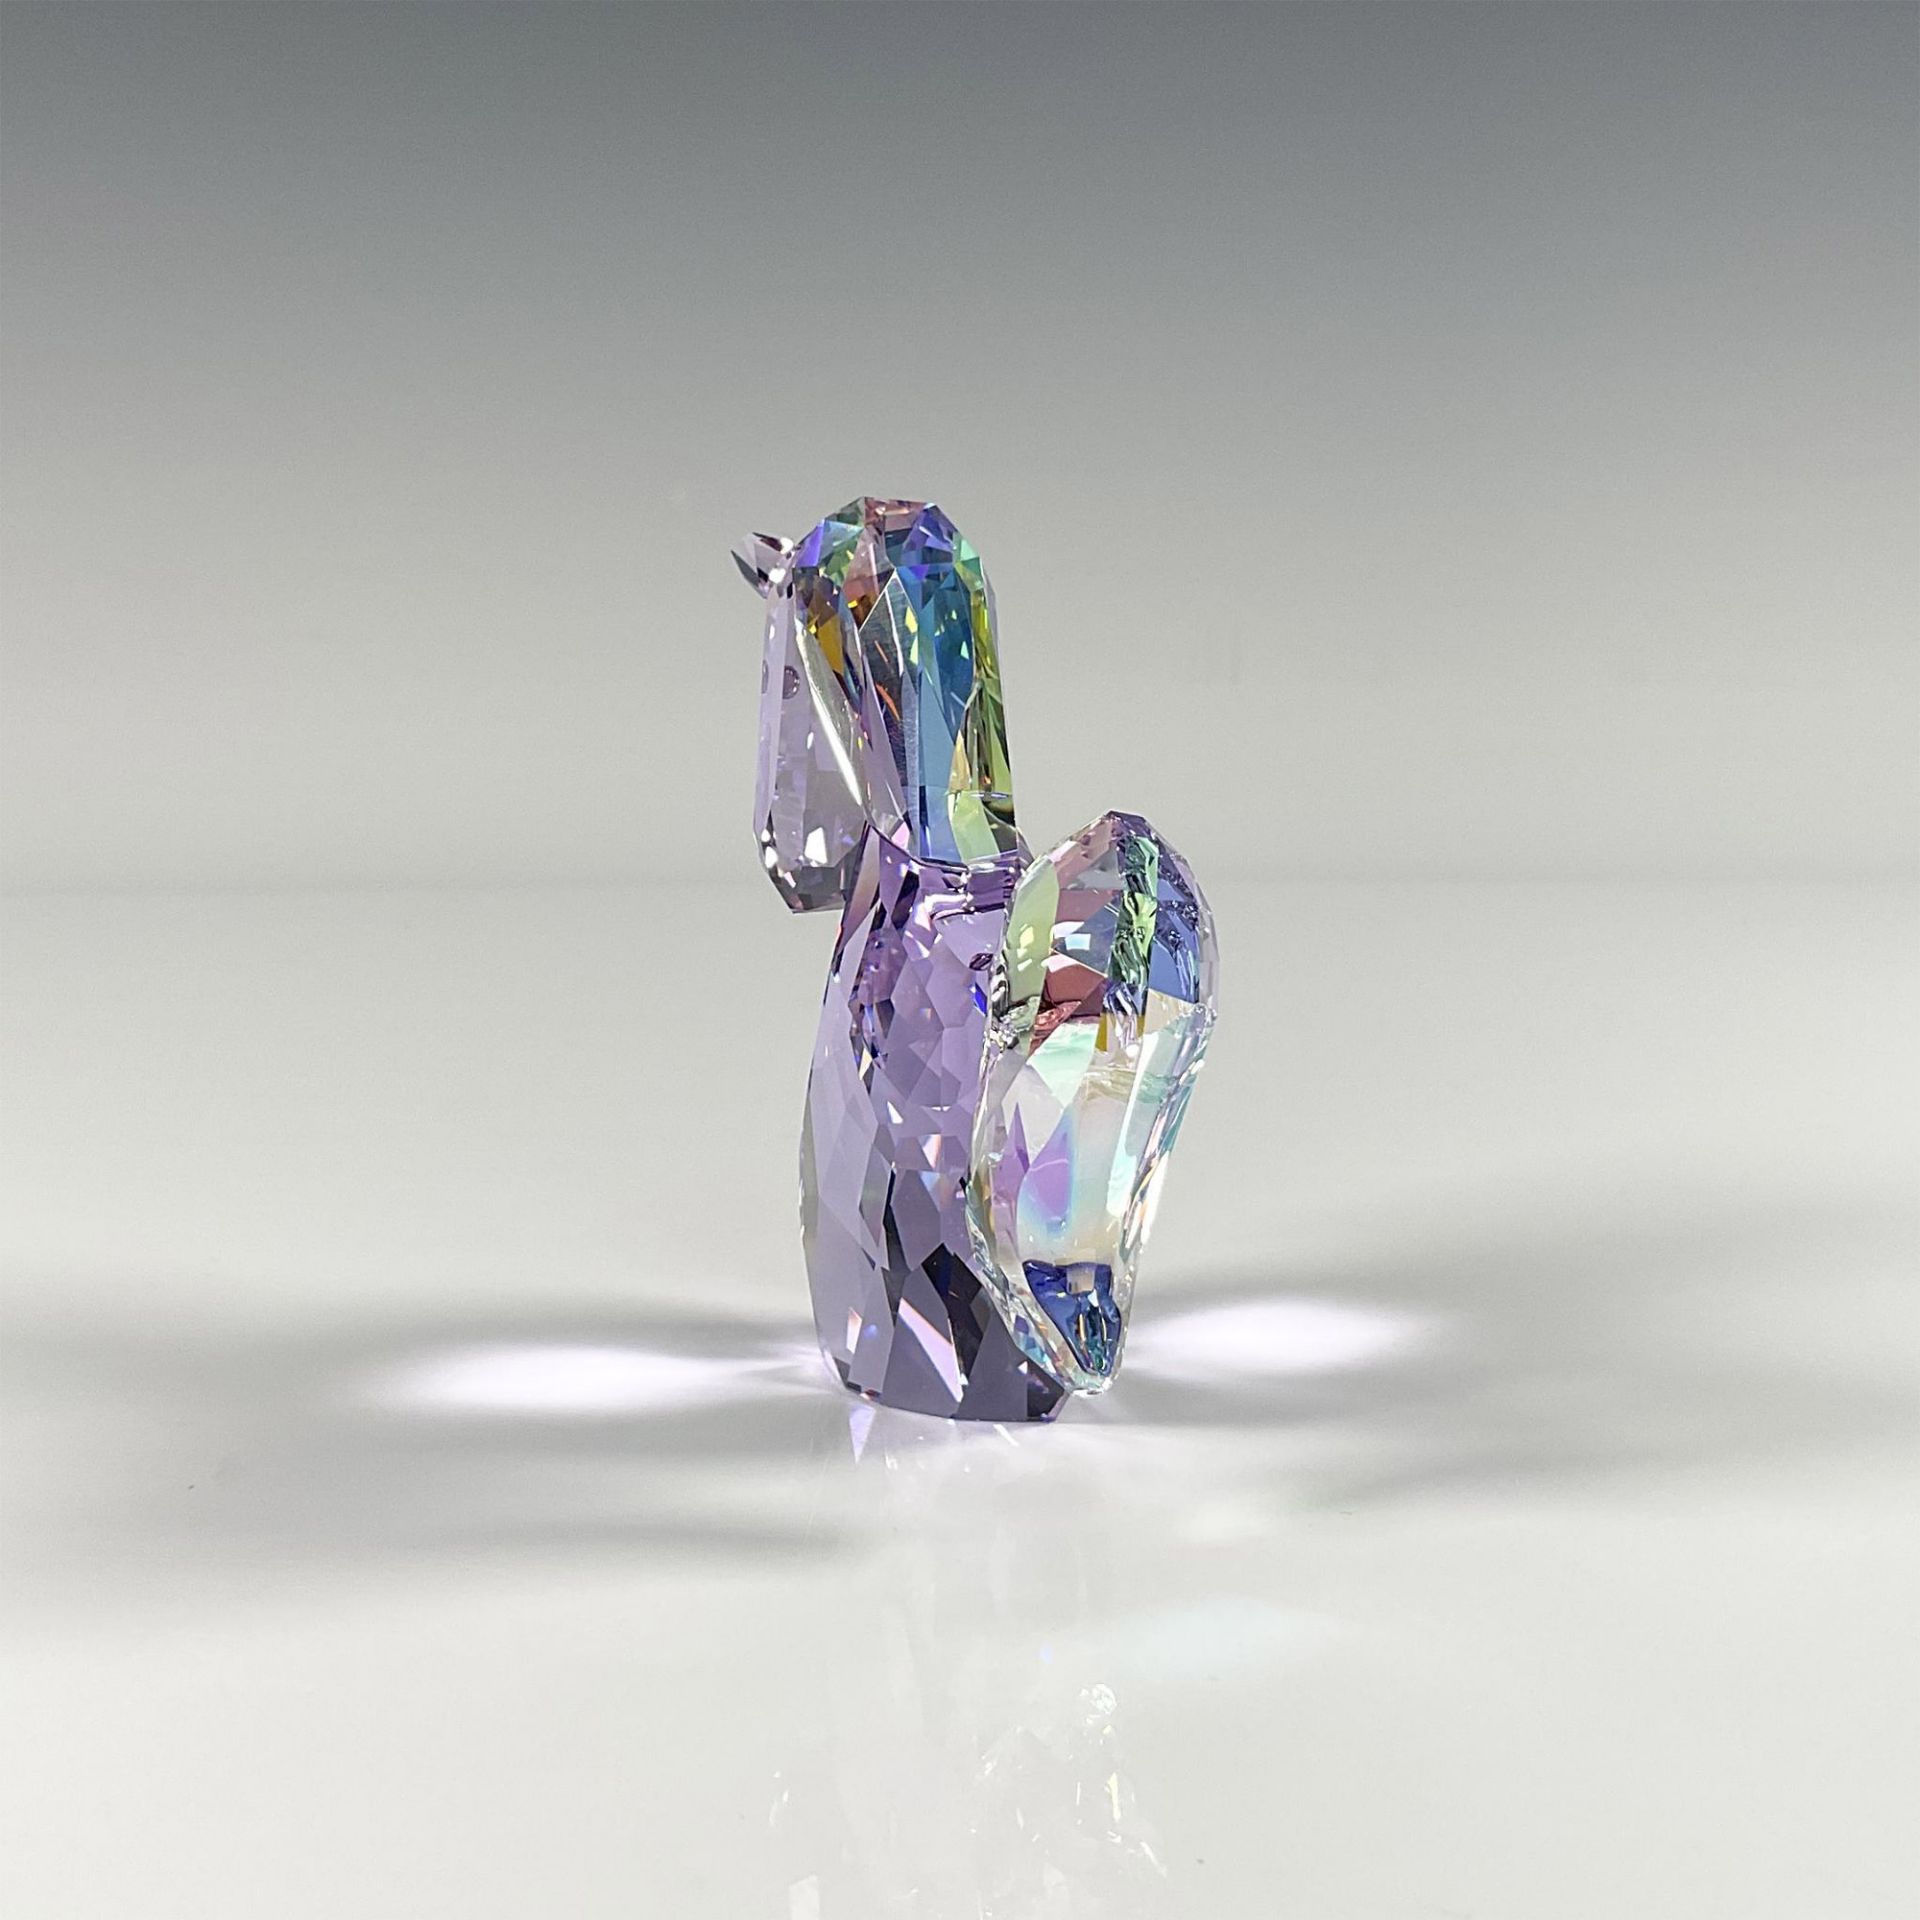 Swarovski Crystal Figurine, Jasmine The Horse - Image 3 of 4